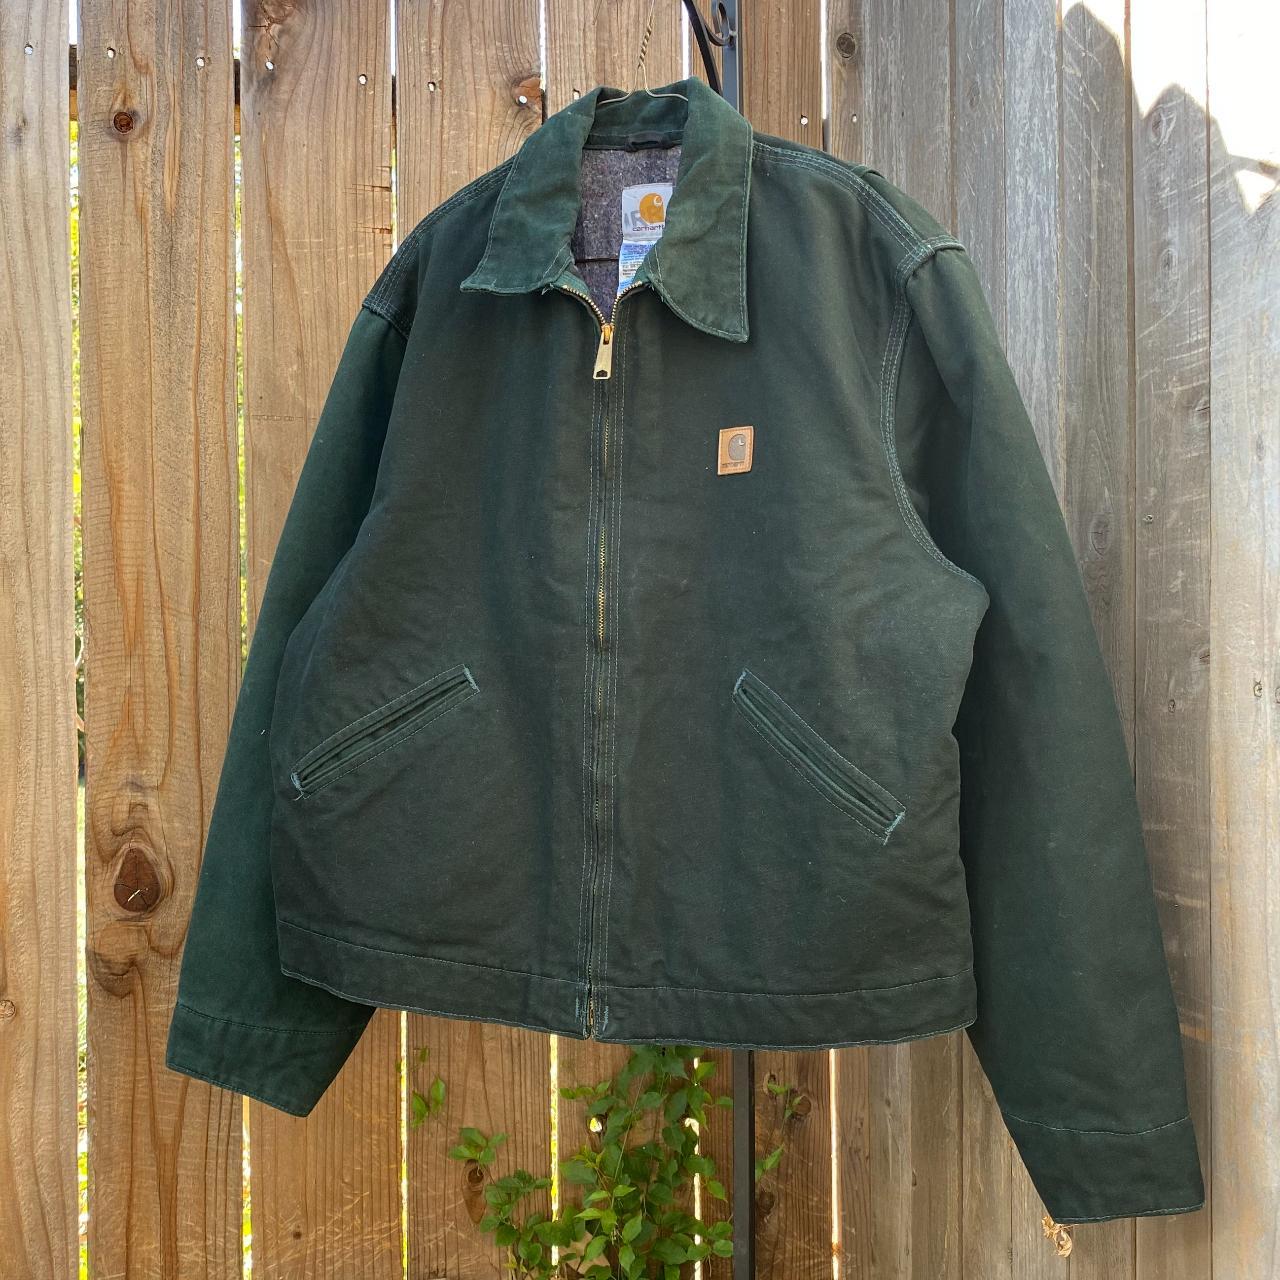 Carhartt Men's Green Jacket | Depop